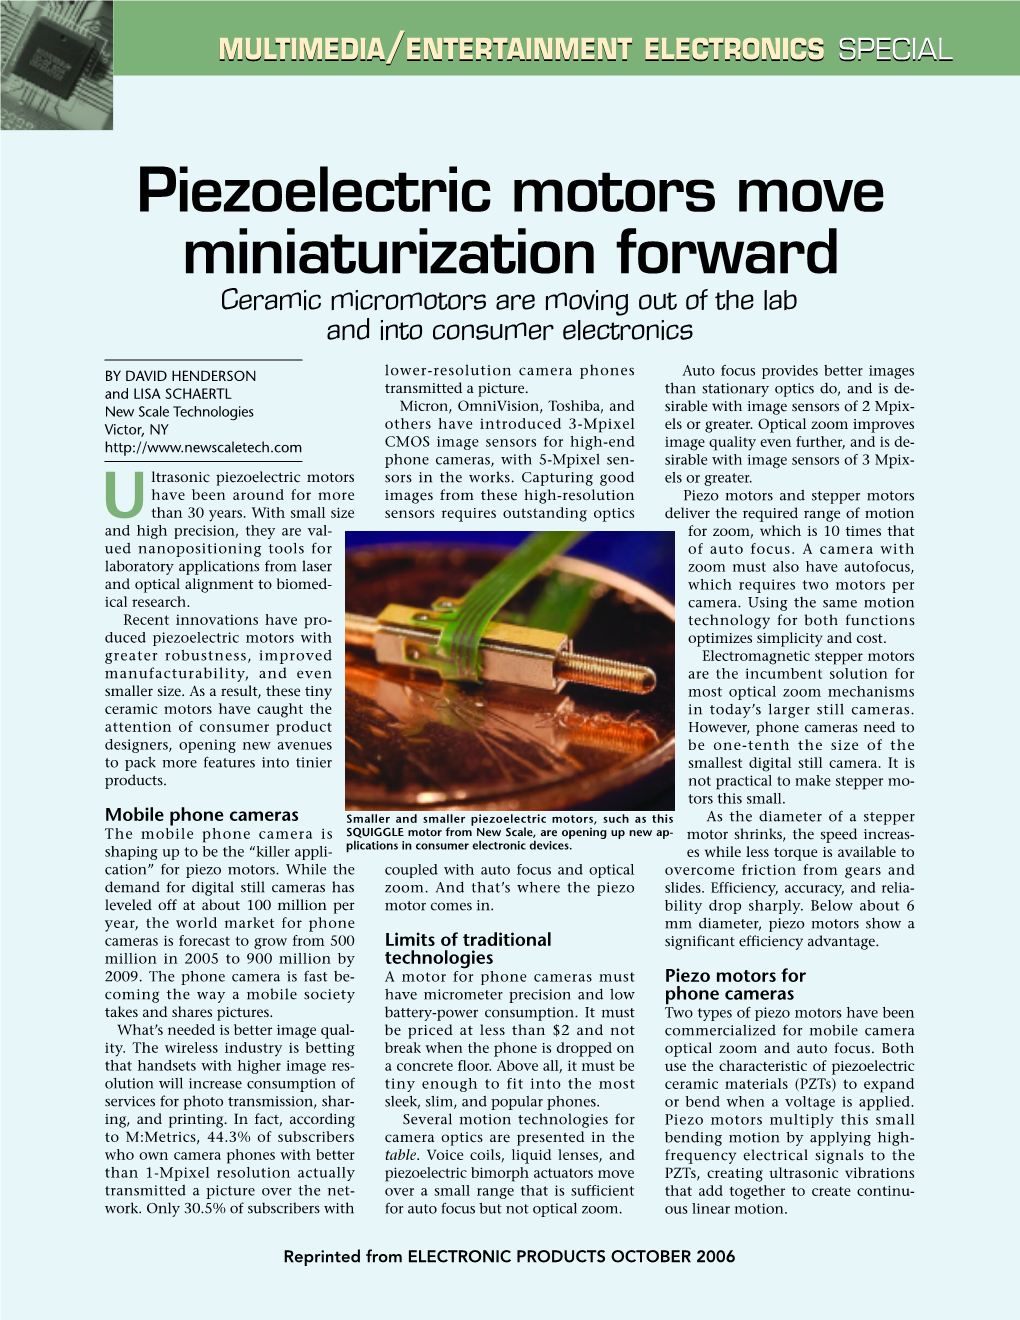 Piezo Motors Move Miniaturization Forward